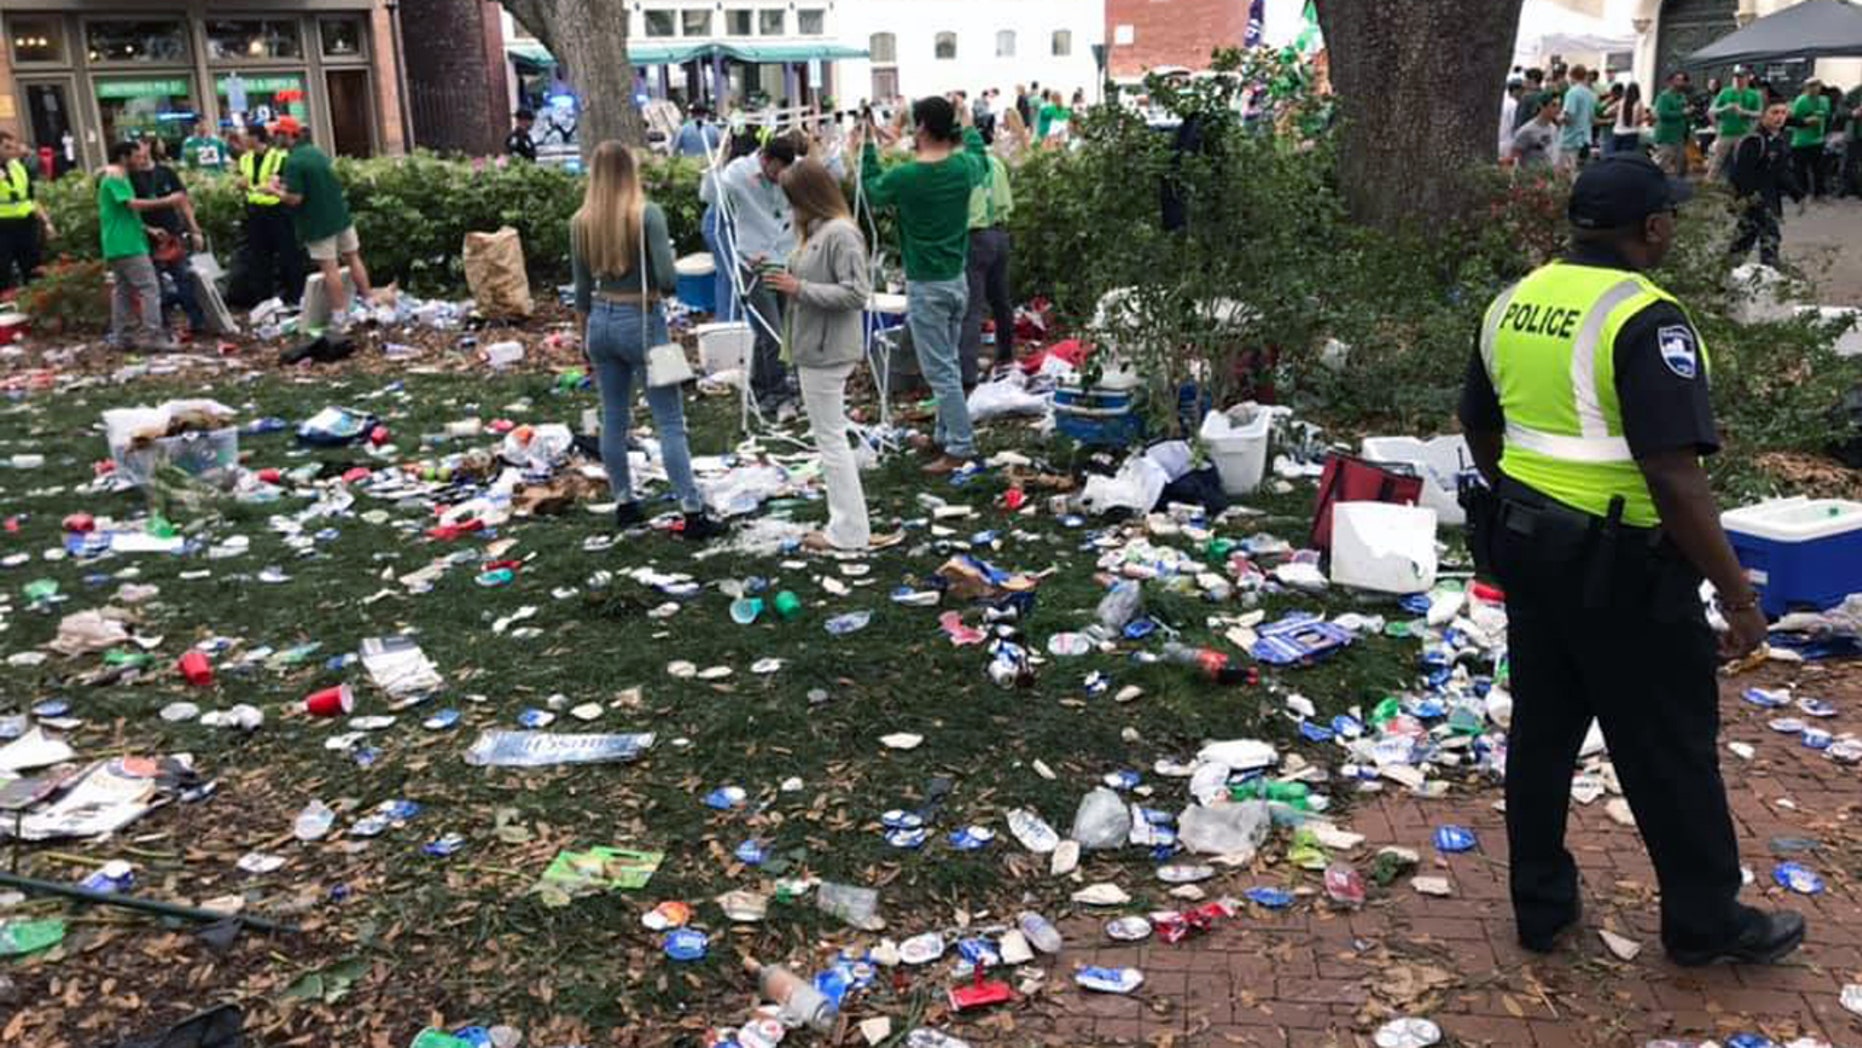 Savannah sees massive trash mess after St. Patrick's Day celebrations